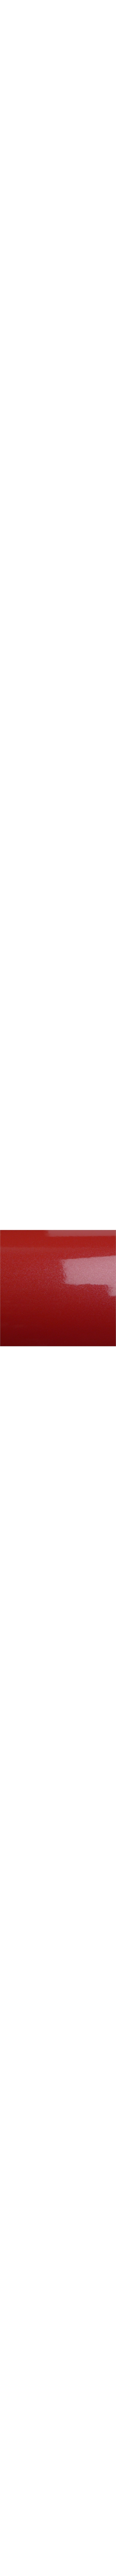 2080-G203 Red metallic en 1.524m x 22.86 ml